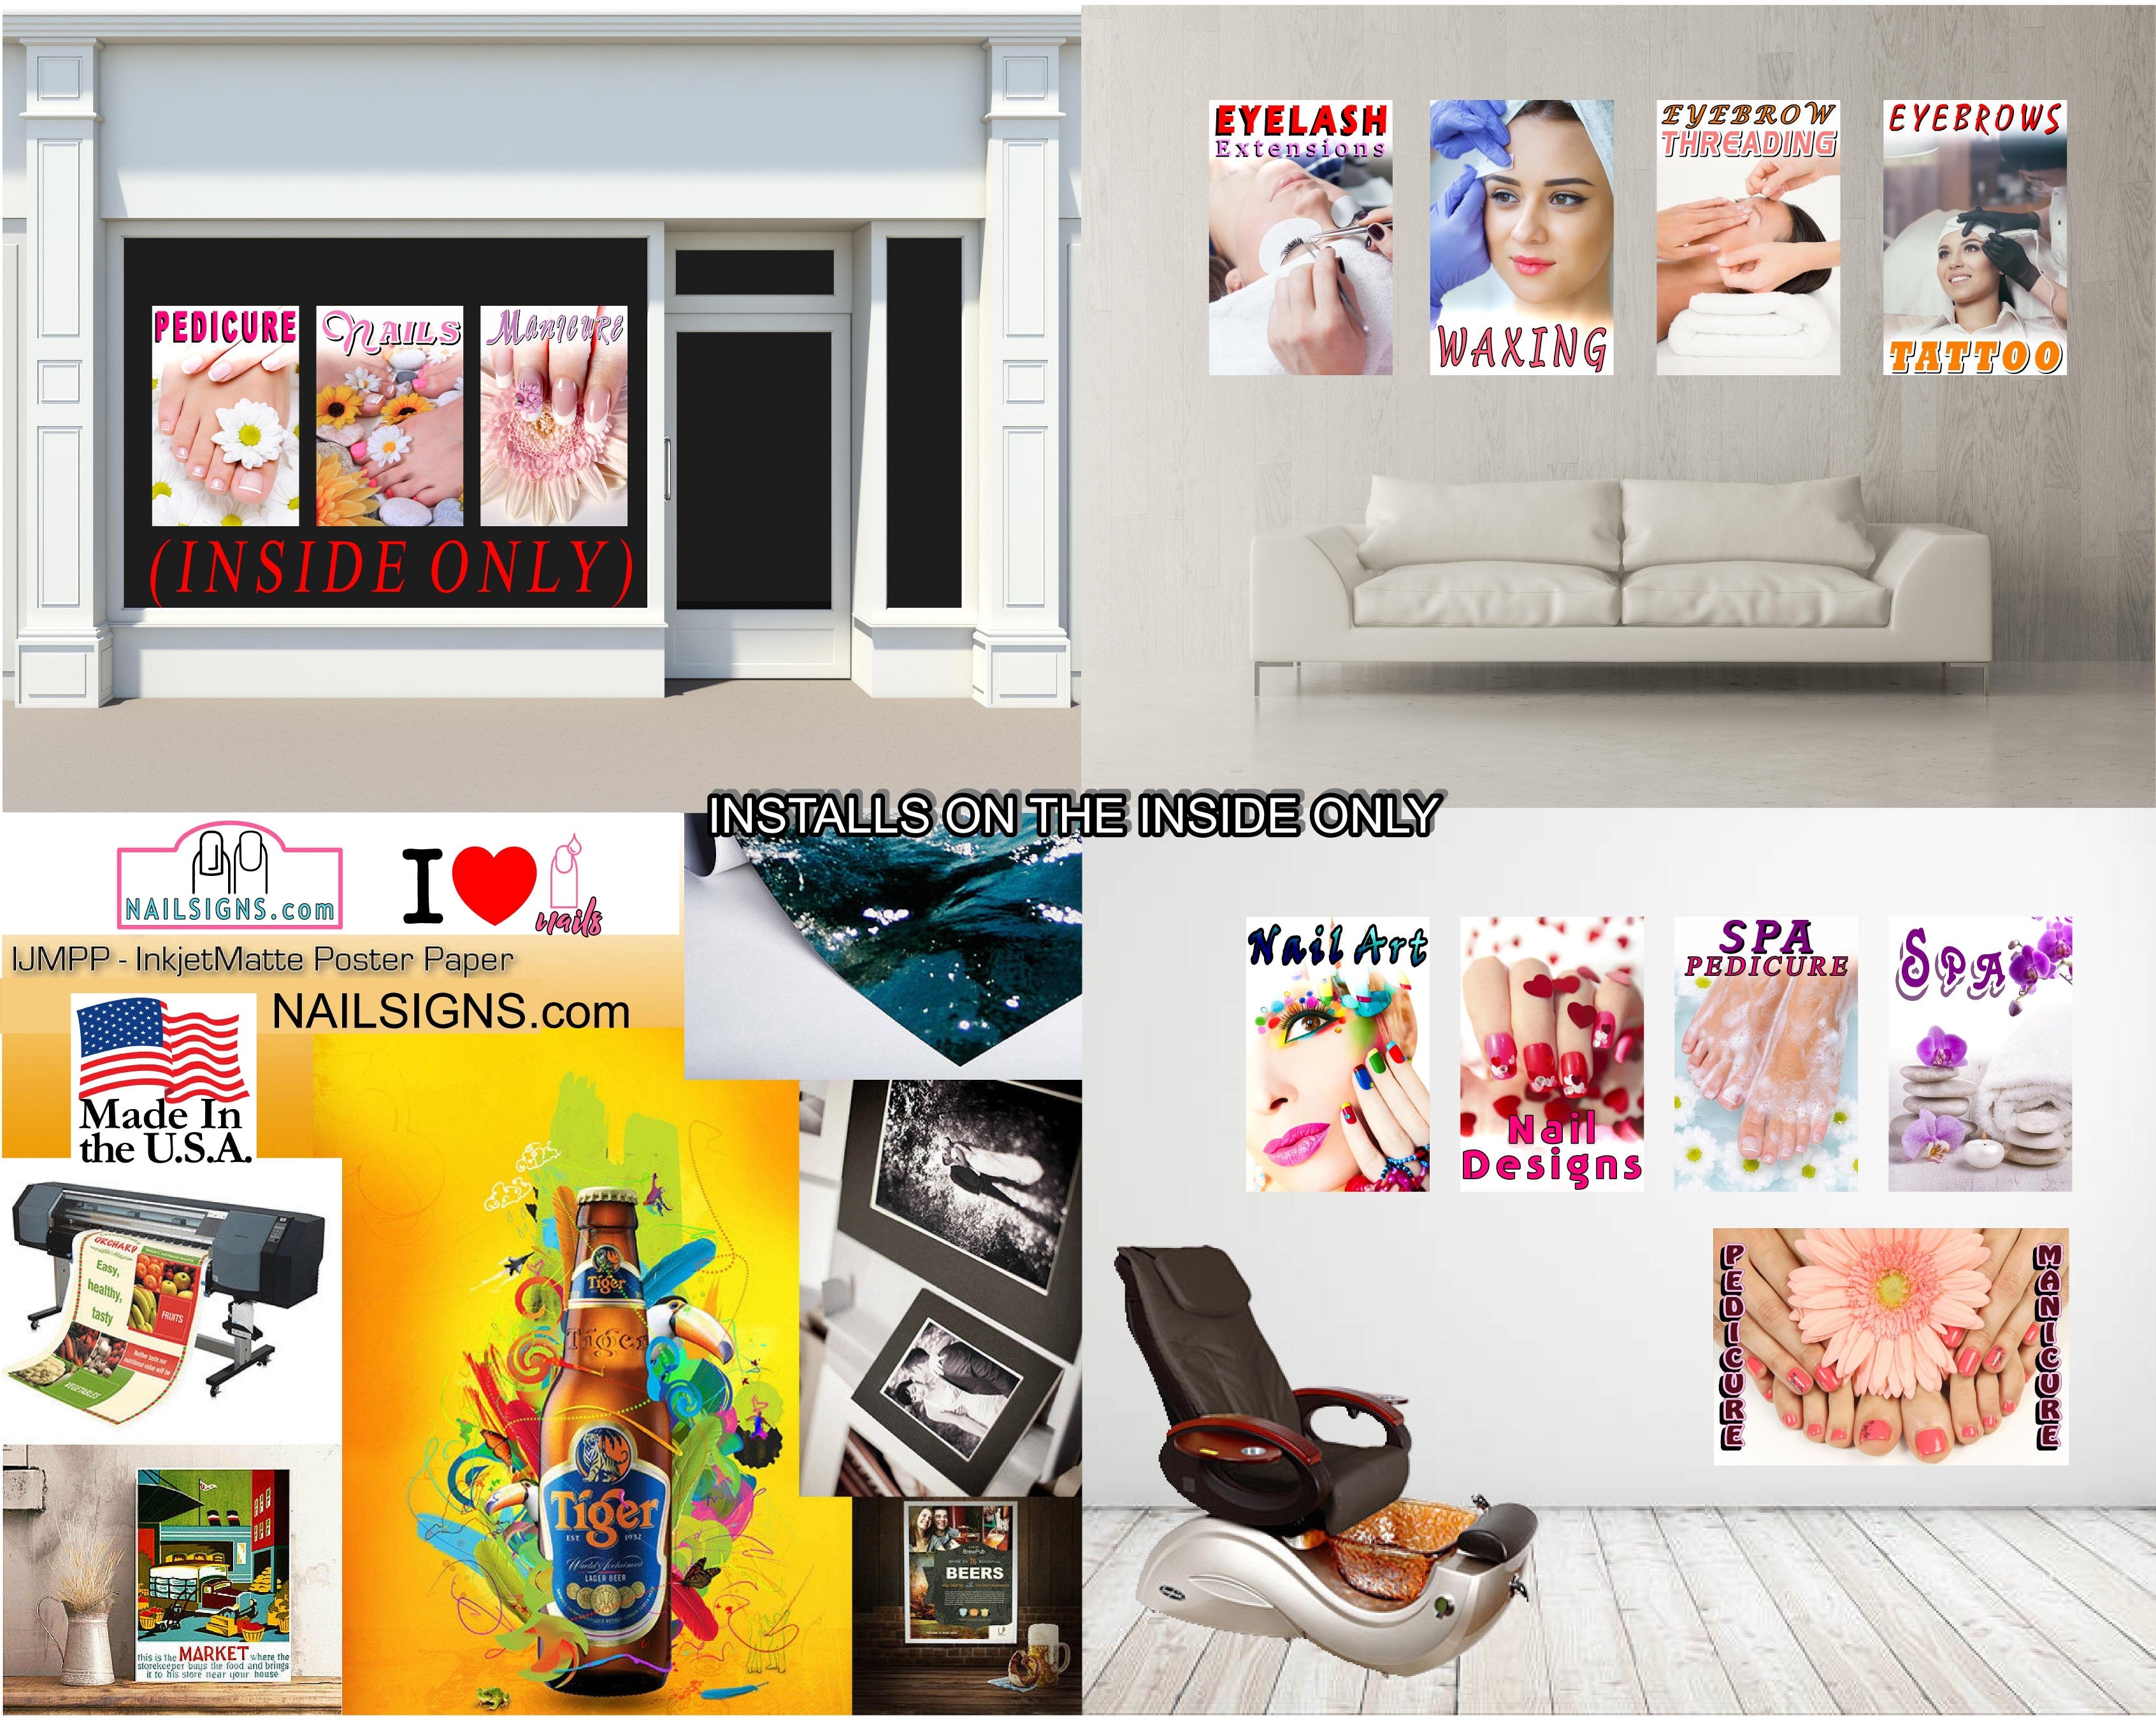 Pedicure & Manicure 18 Photo-Realistic Paper Poster Premium Matte Interior Inside Sign Adverting Marketing Wall Window Non-Laminated Vertical